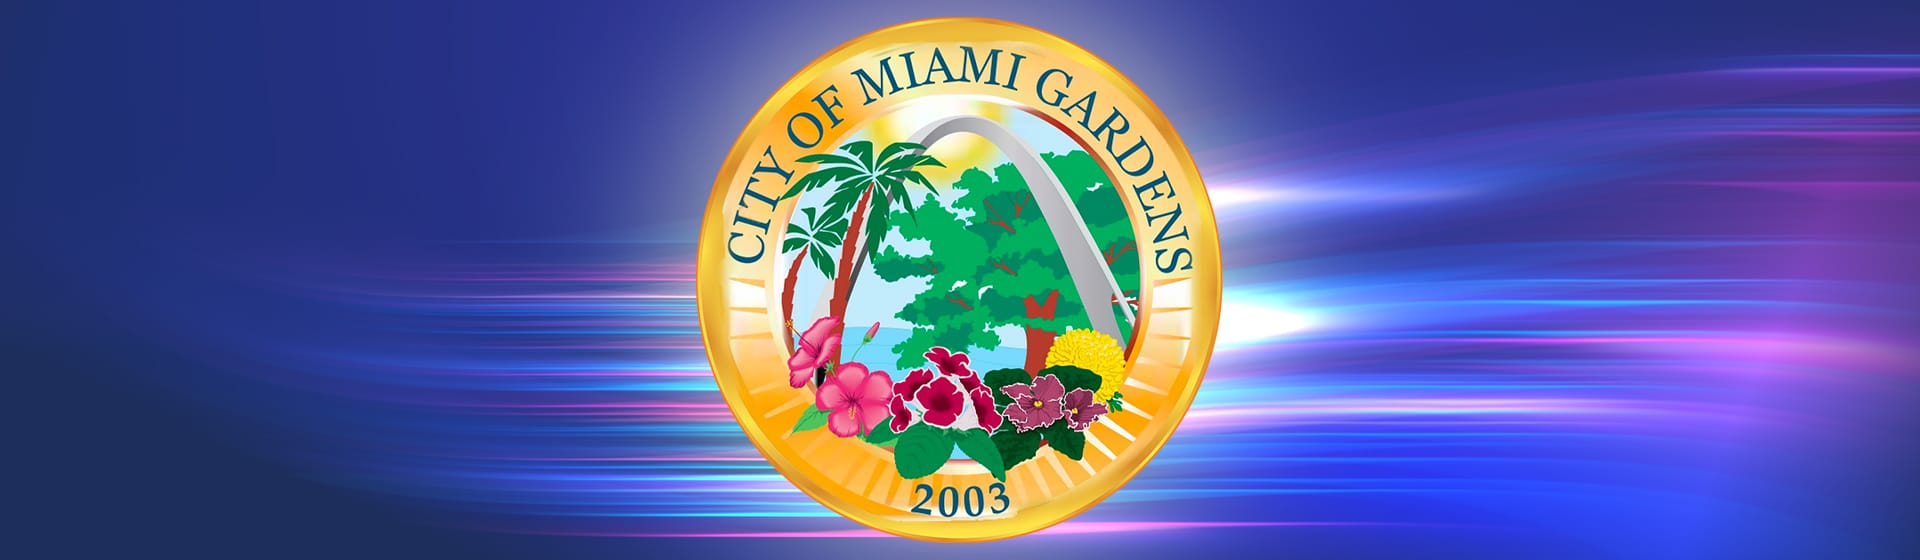 Miami Gardens songs and videos - CEEK.com